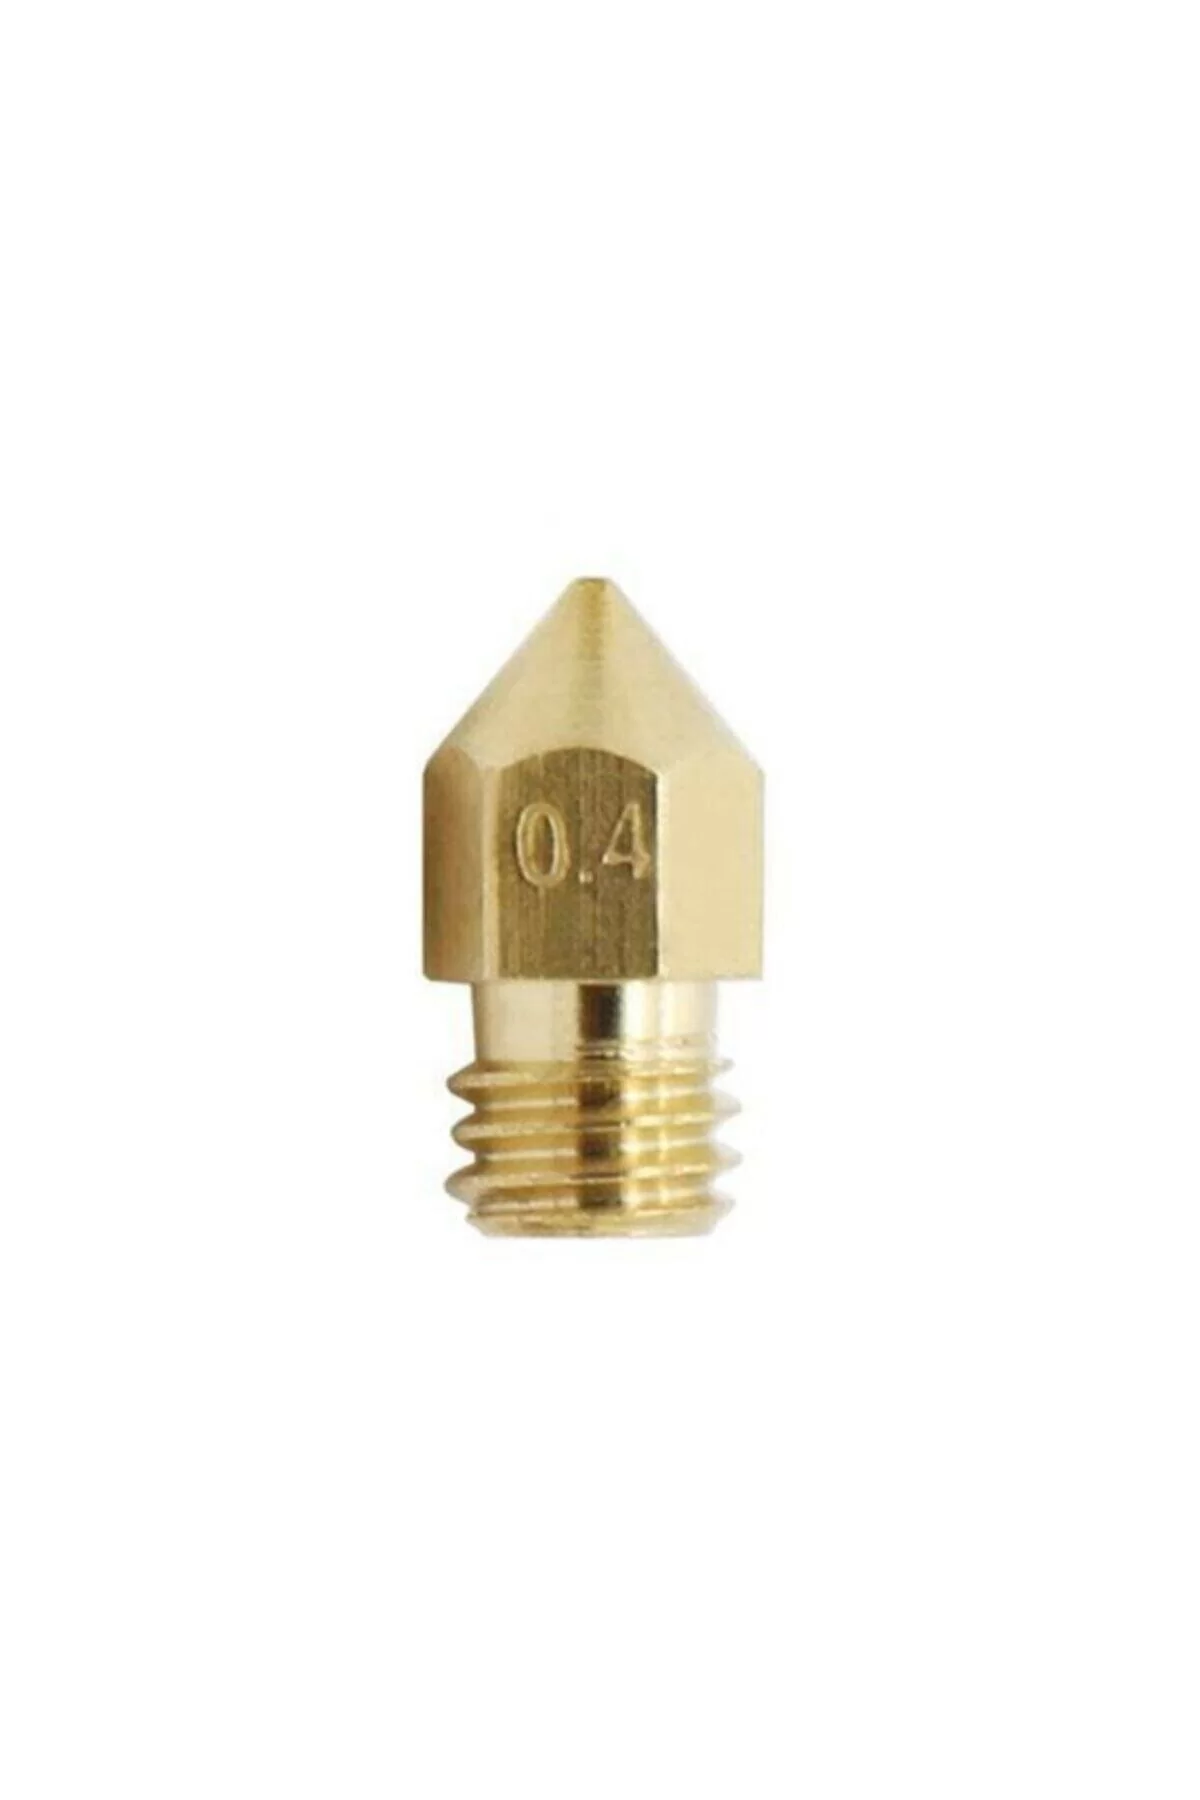 MKBT-MK7 MK8 CR10 Brass Nozzle 1.75mm-0.4mm 